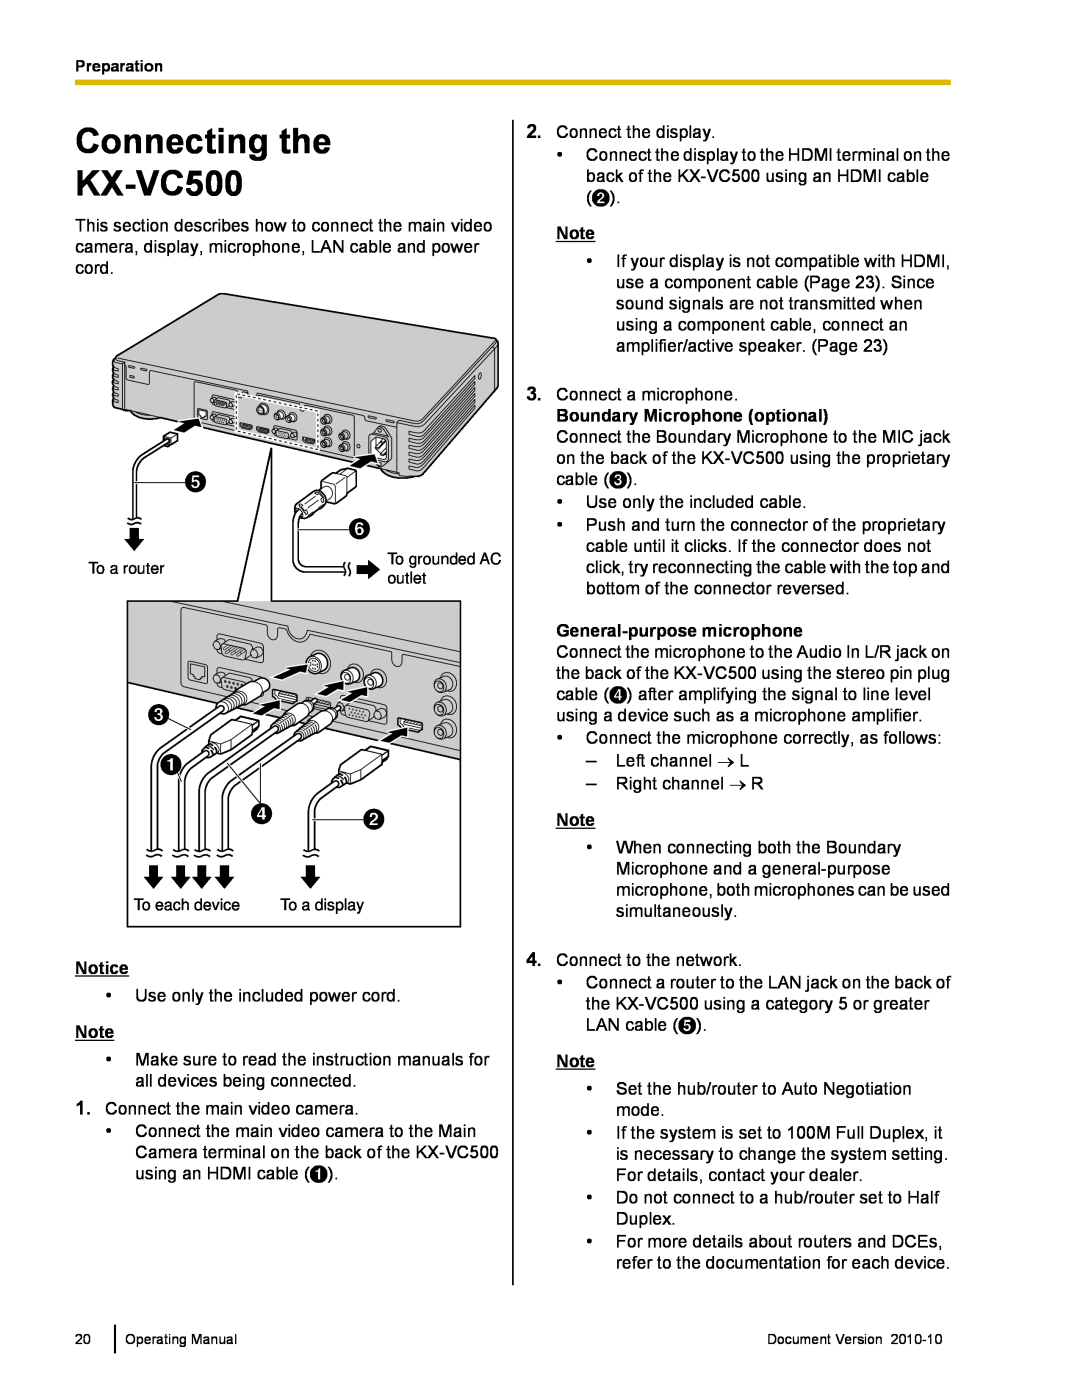 Panasonic manual Connecting the KX-VC500 